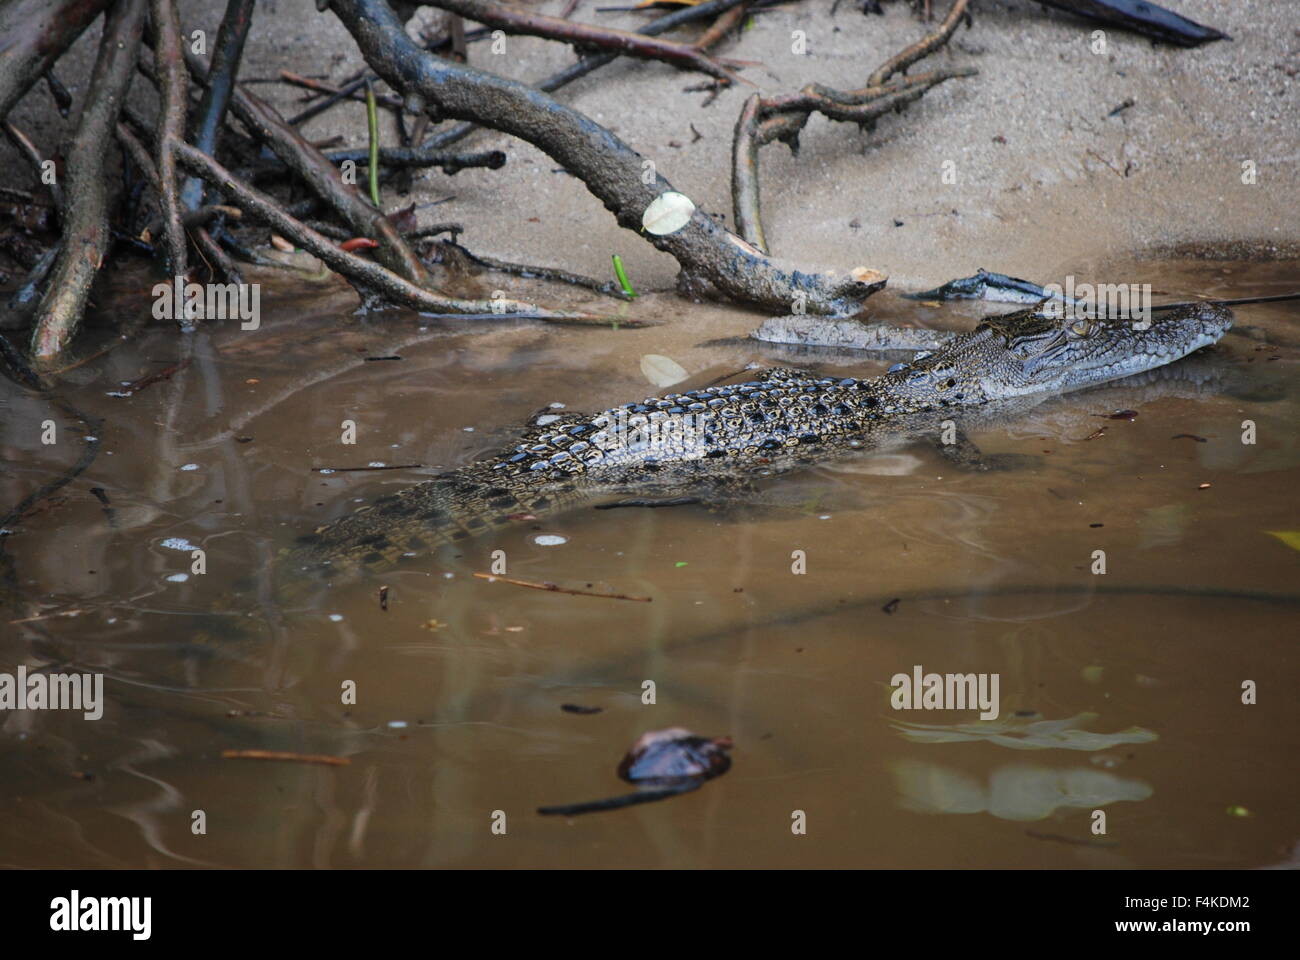 Freshwater crocodile at the Daintree river in Port Douglas, Queensland, Australia Stock Photo